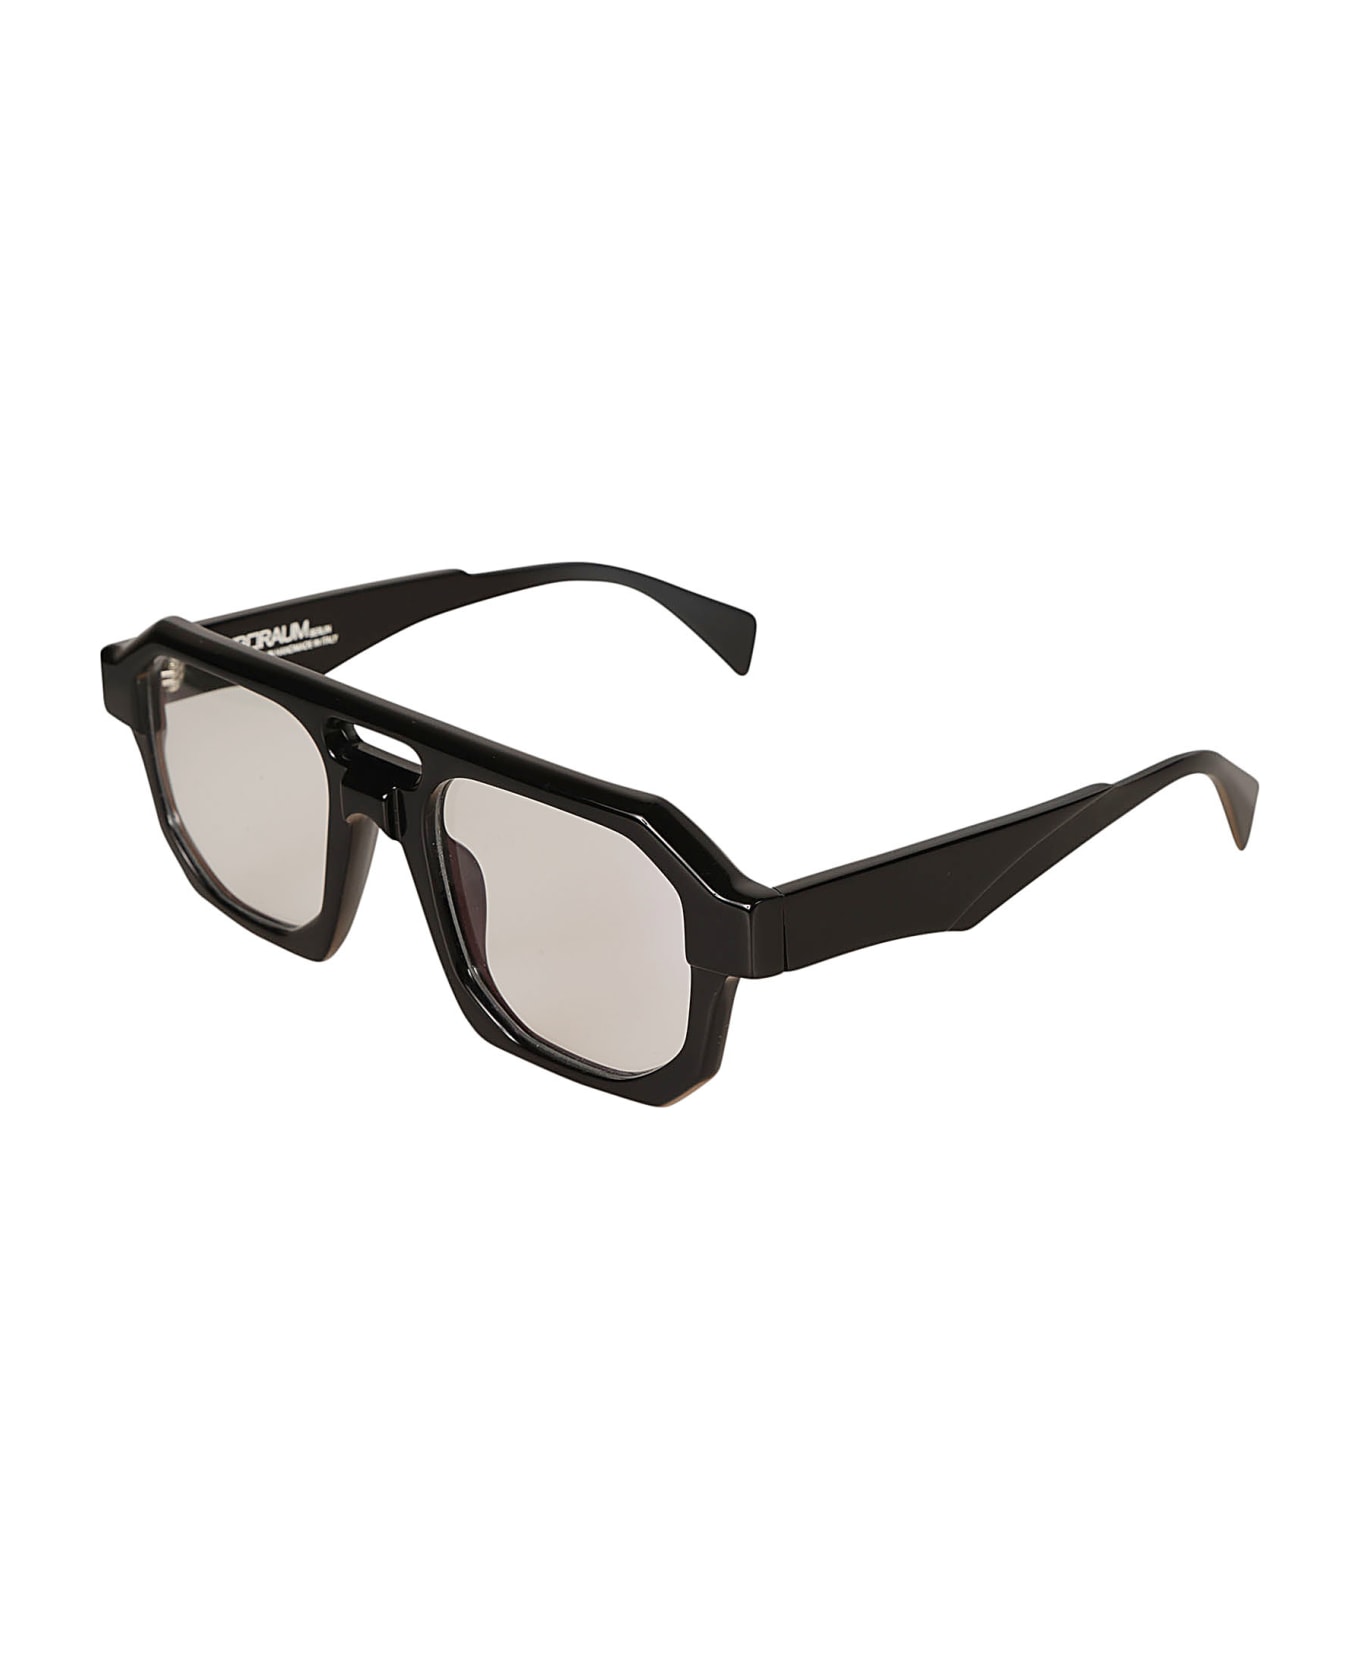 Kuboraum K33 Glasses Glasses - black アイウェア